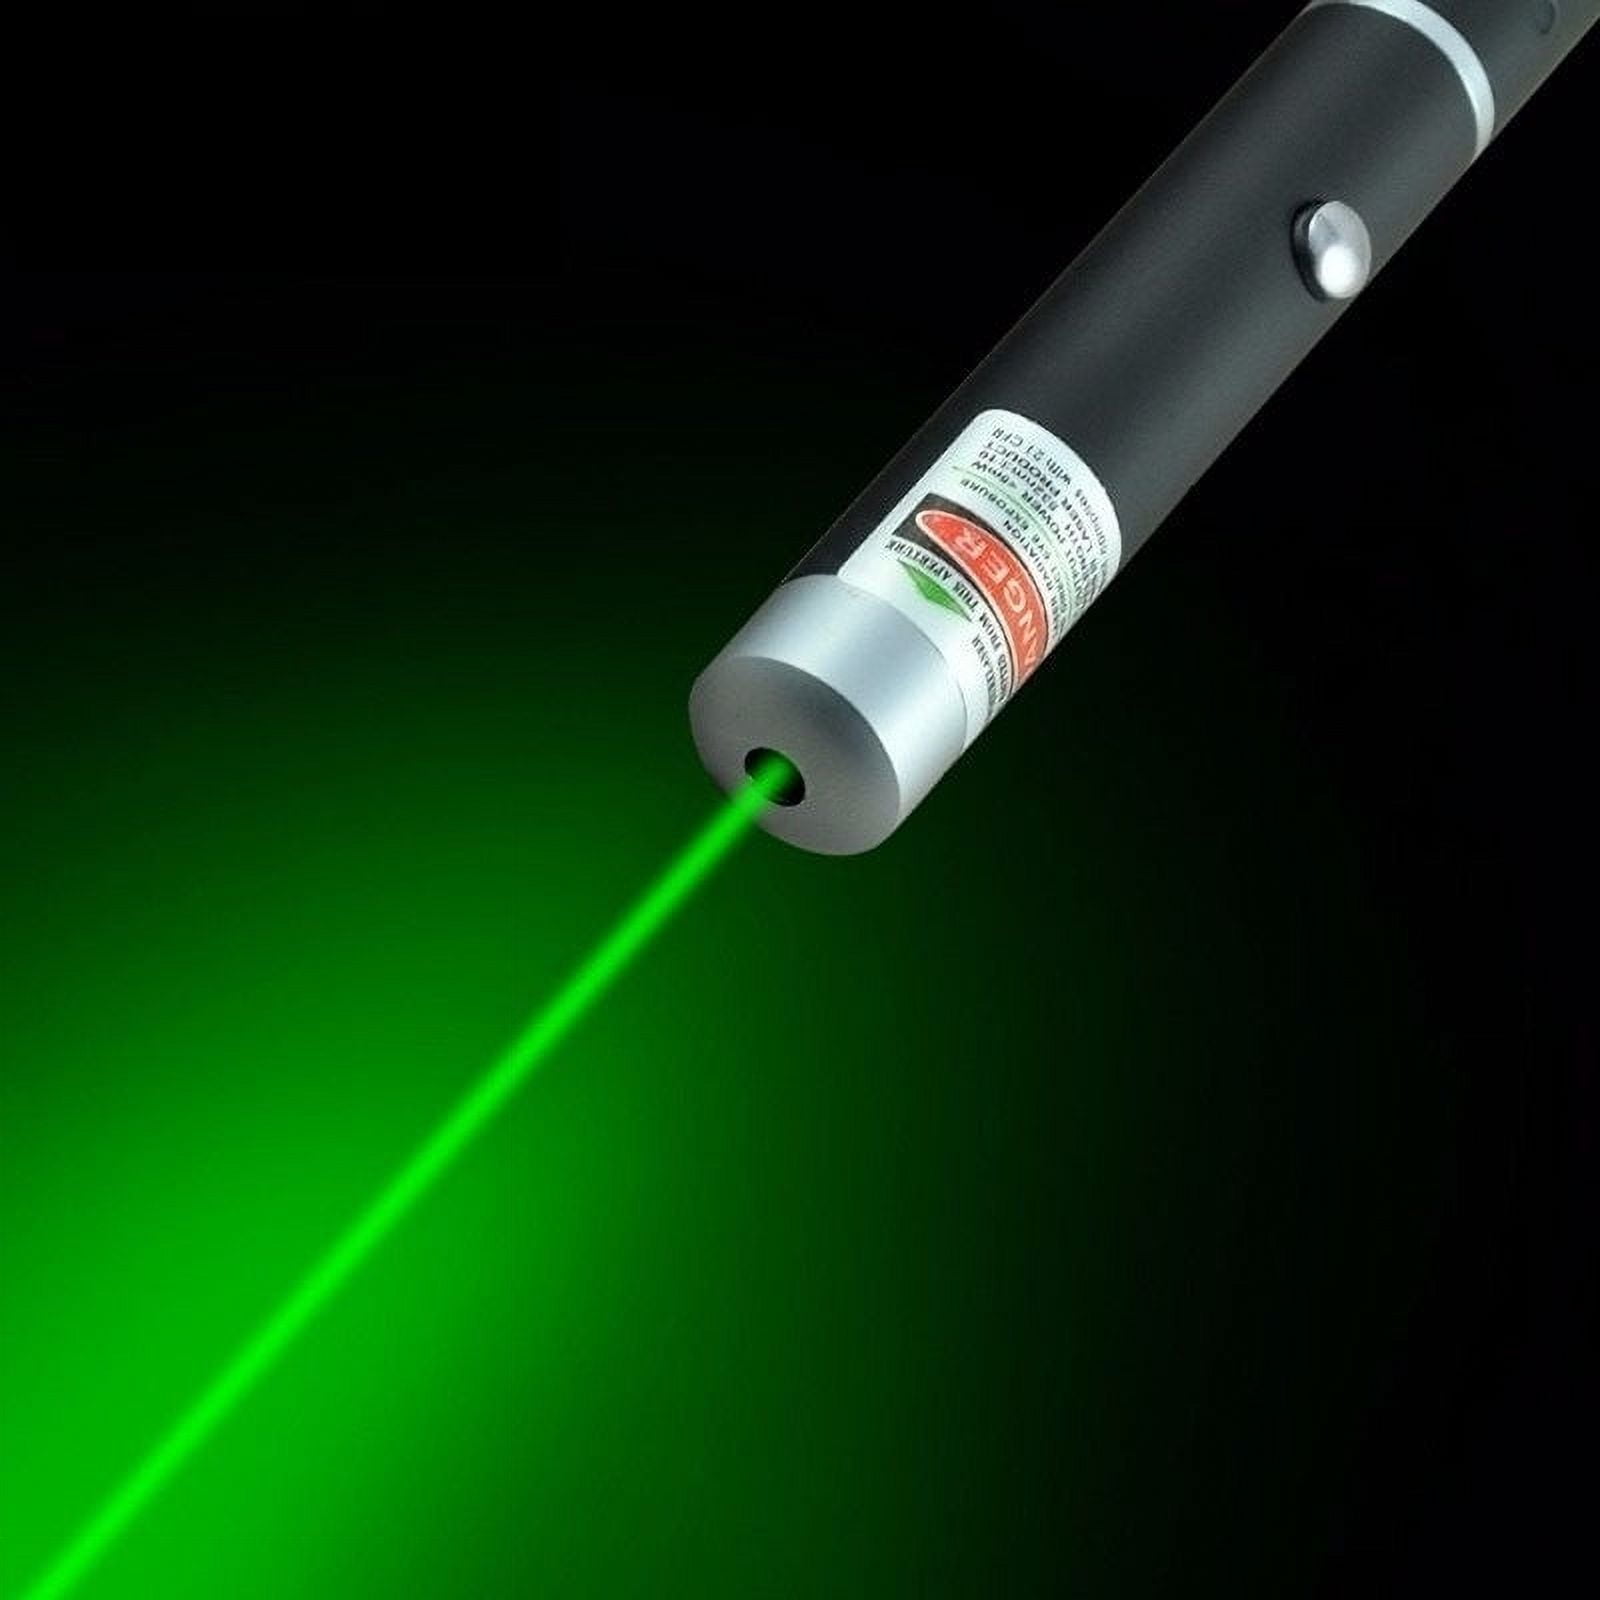 1mw - 532nm Powerful Green Laser Pointer Pen Starbeam